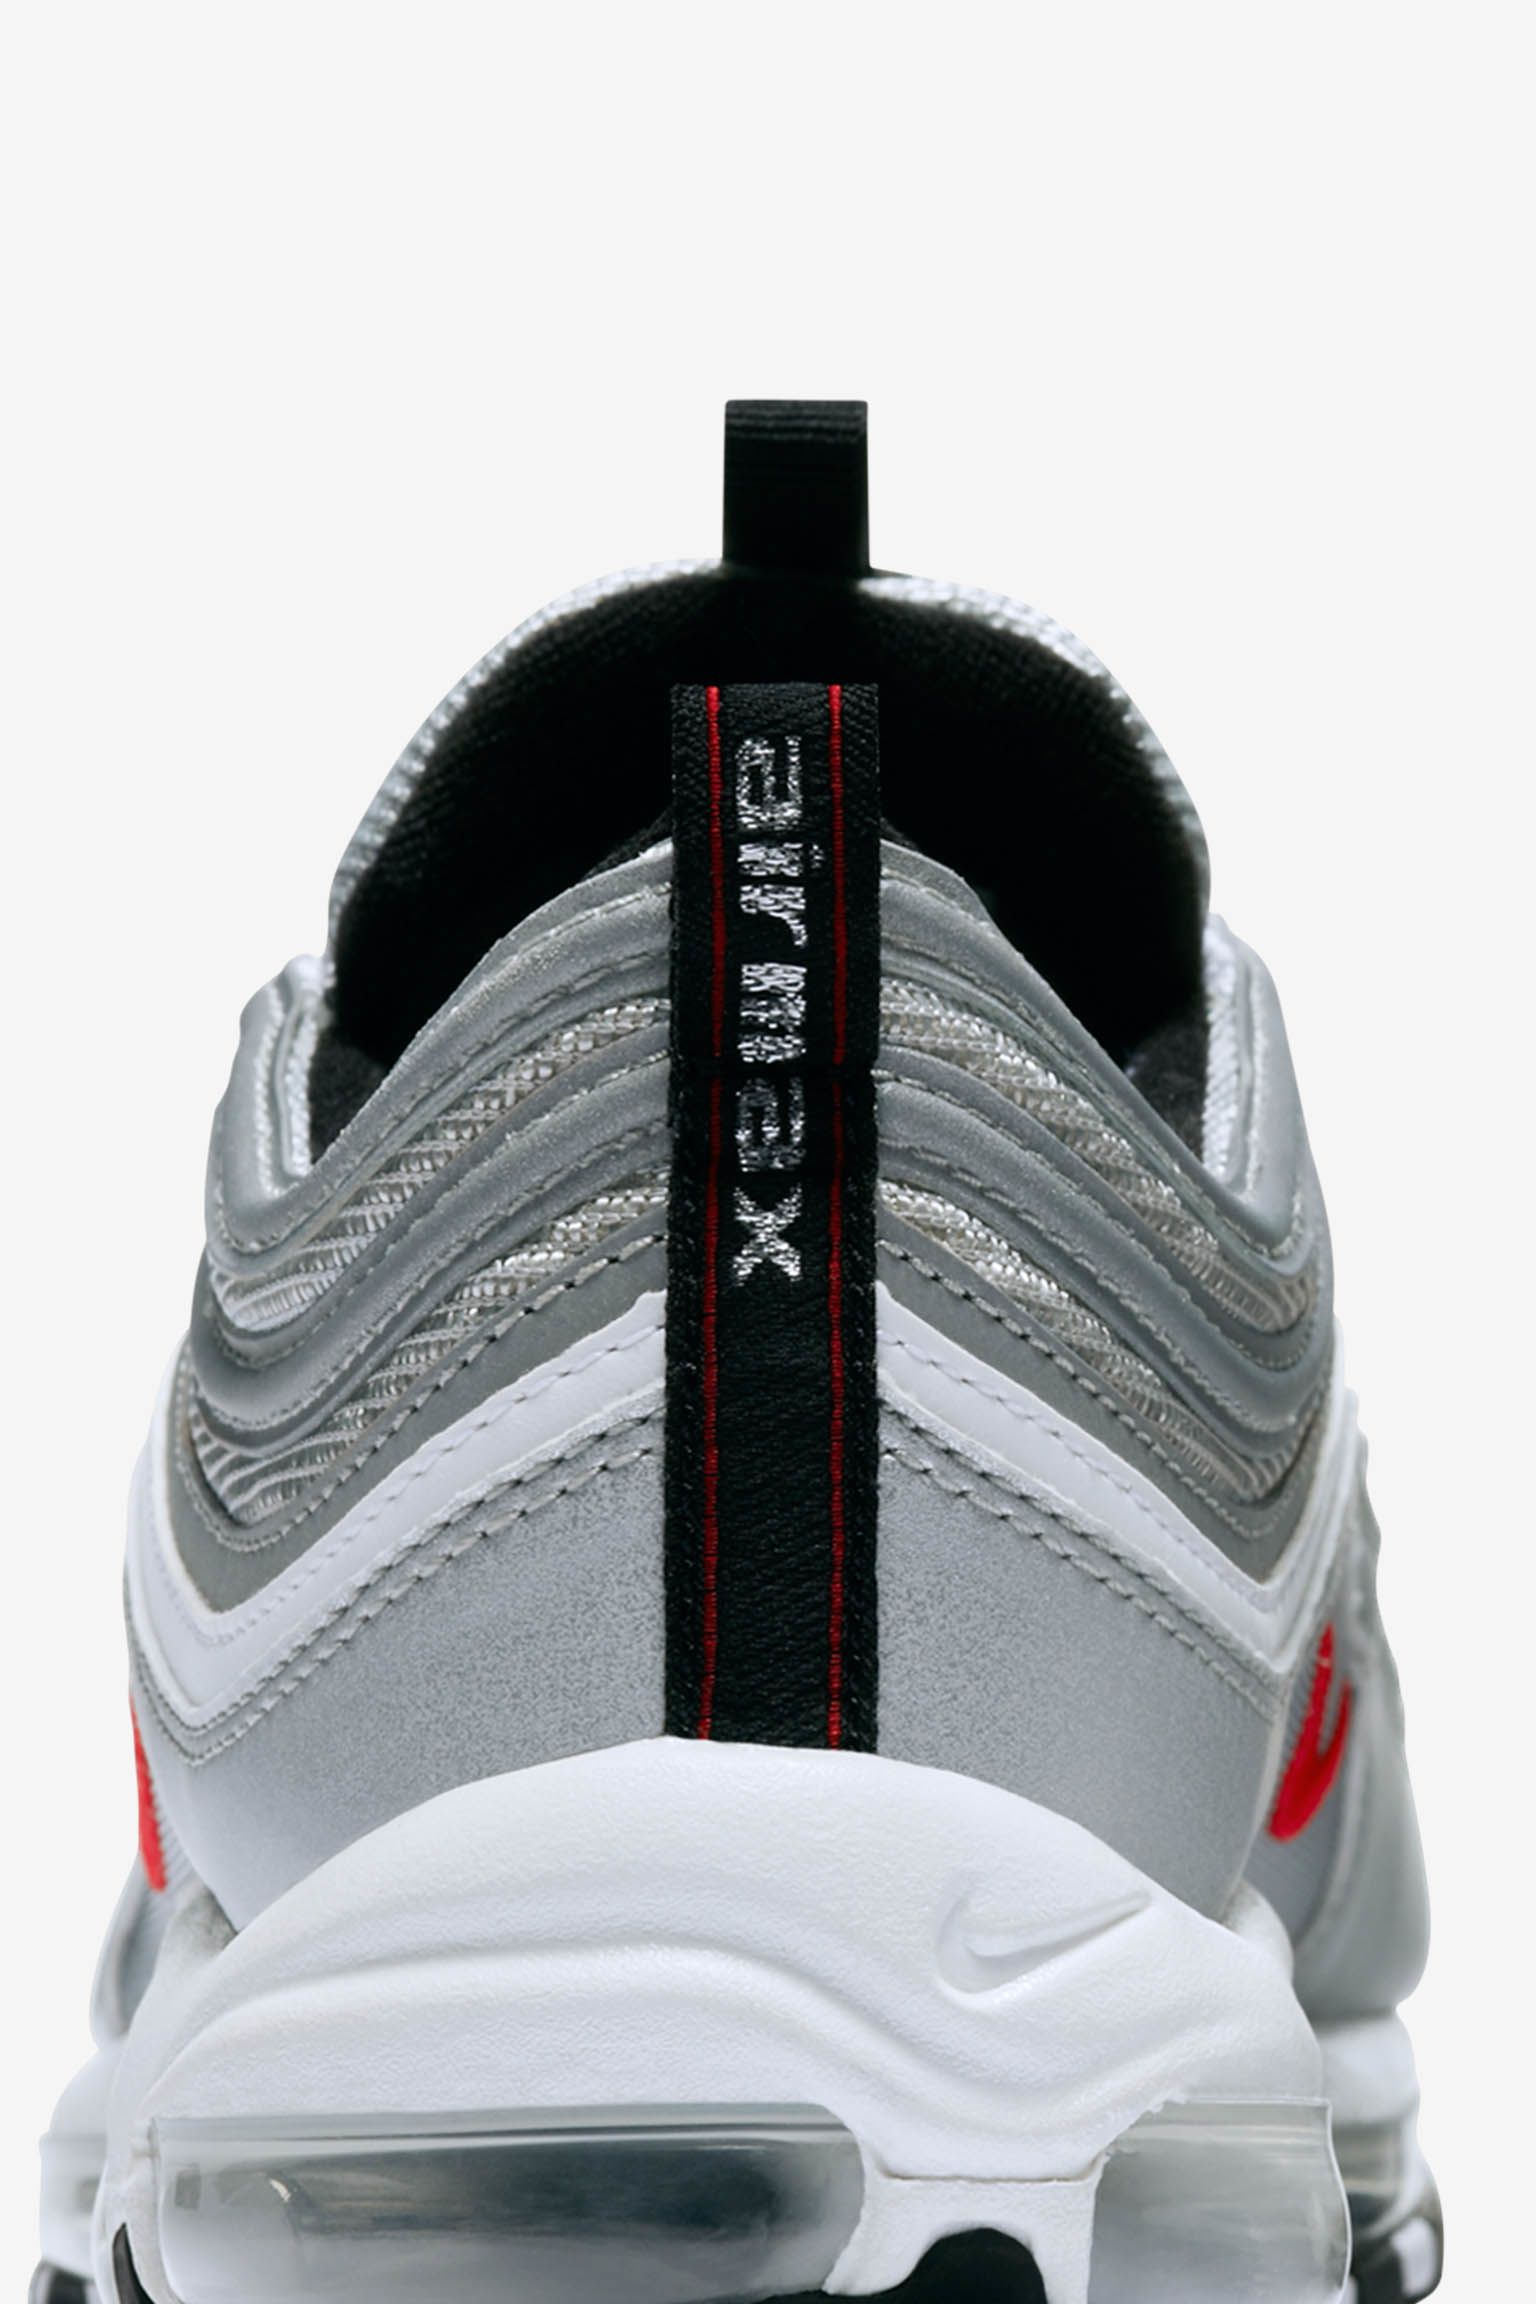 Nike Air Max 97 OG \